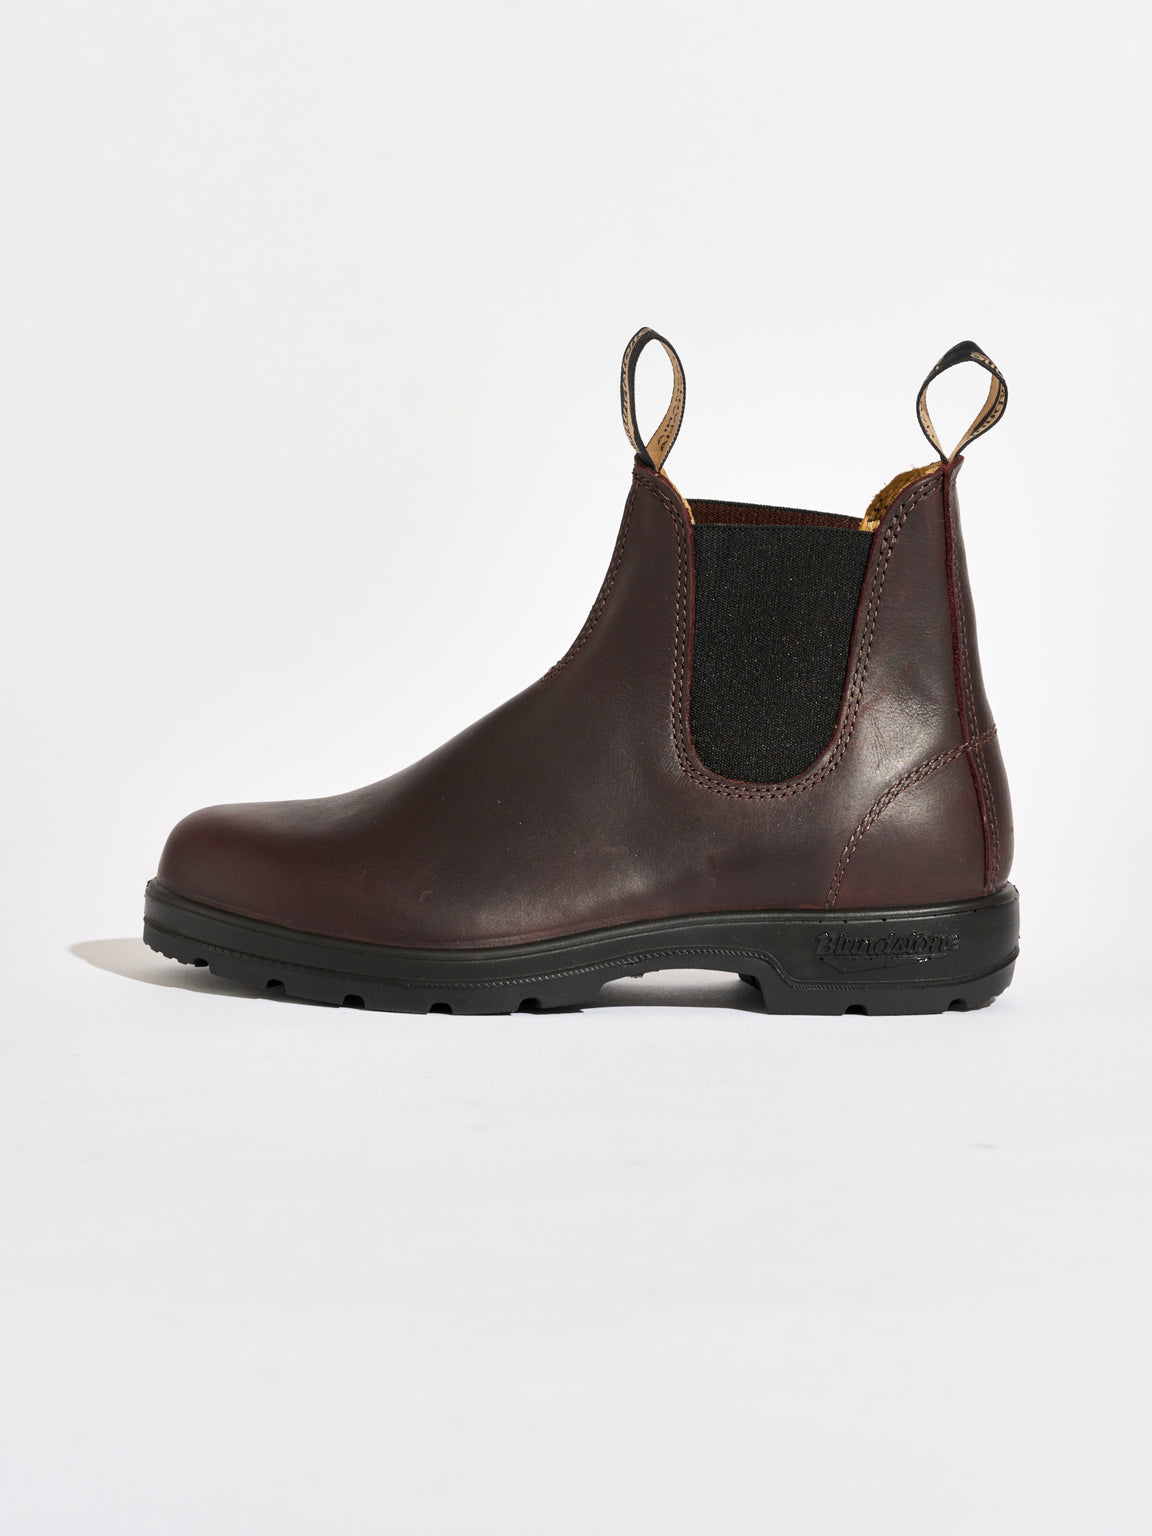 Blundstone | 2130 Classic Chelsea Boots For Women | Bellerose E-shop